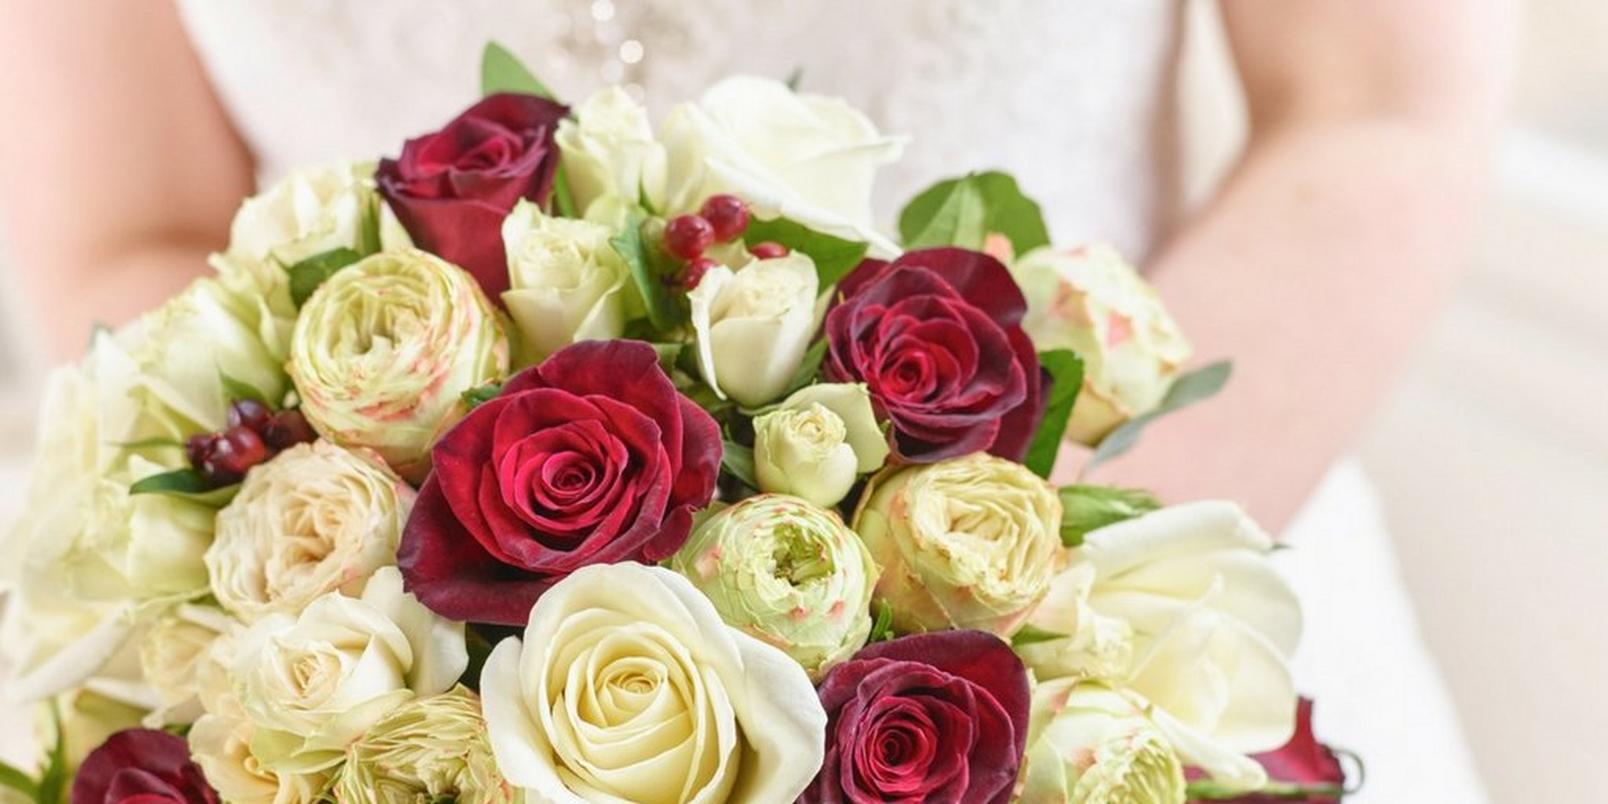 the-hidden-symbolism-in-your-wedding-bouquet-2